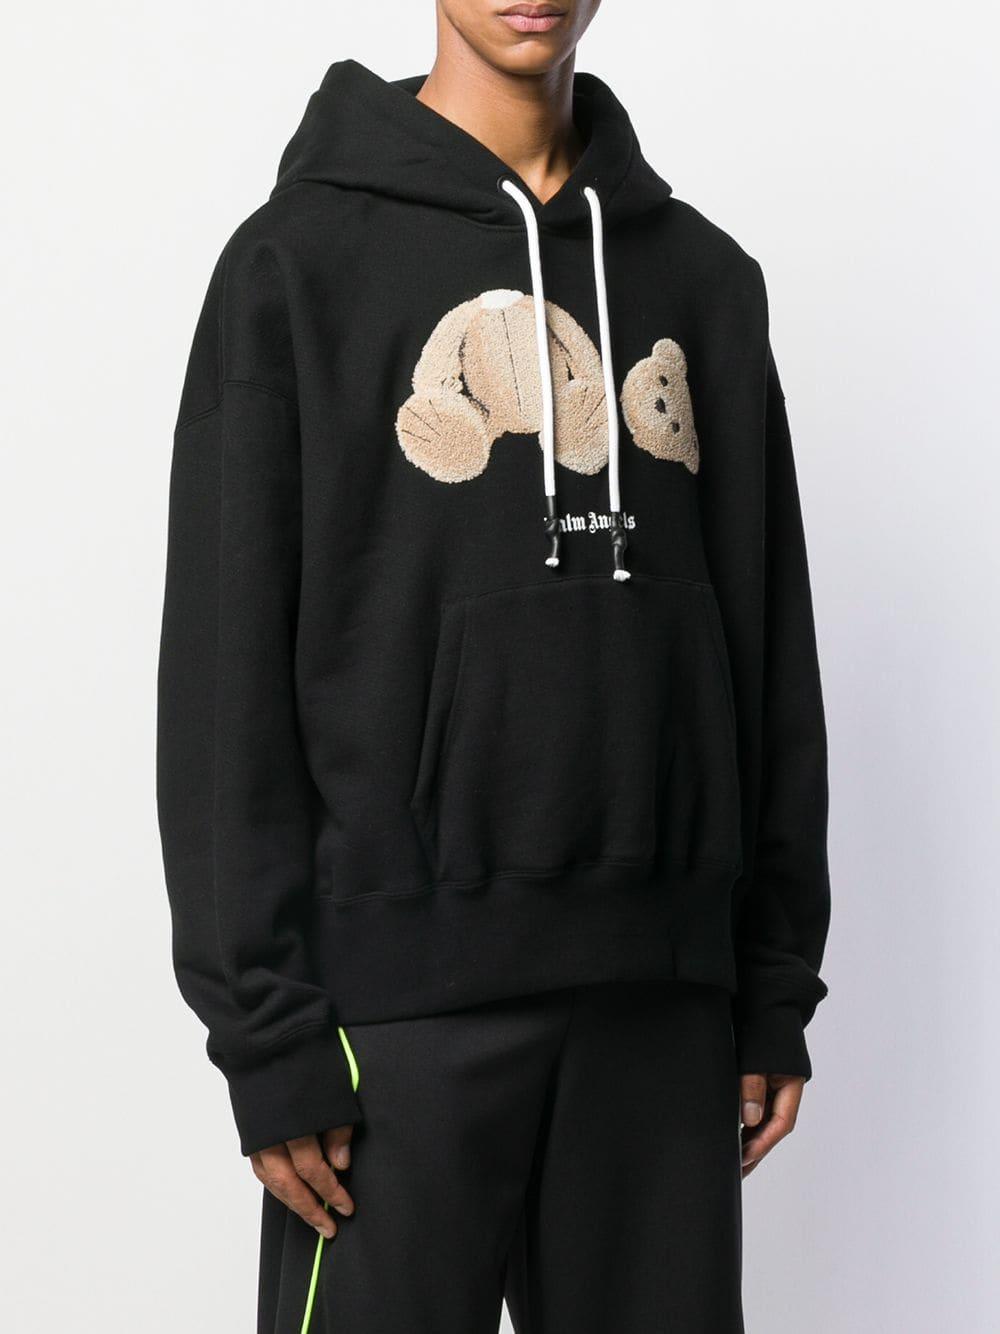 Palm Angels Teddy Bear Hooded Sweatshirt in Black for Men - Save 28% - Lyst